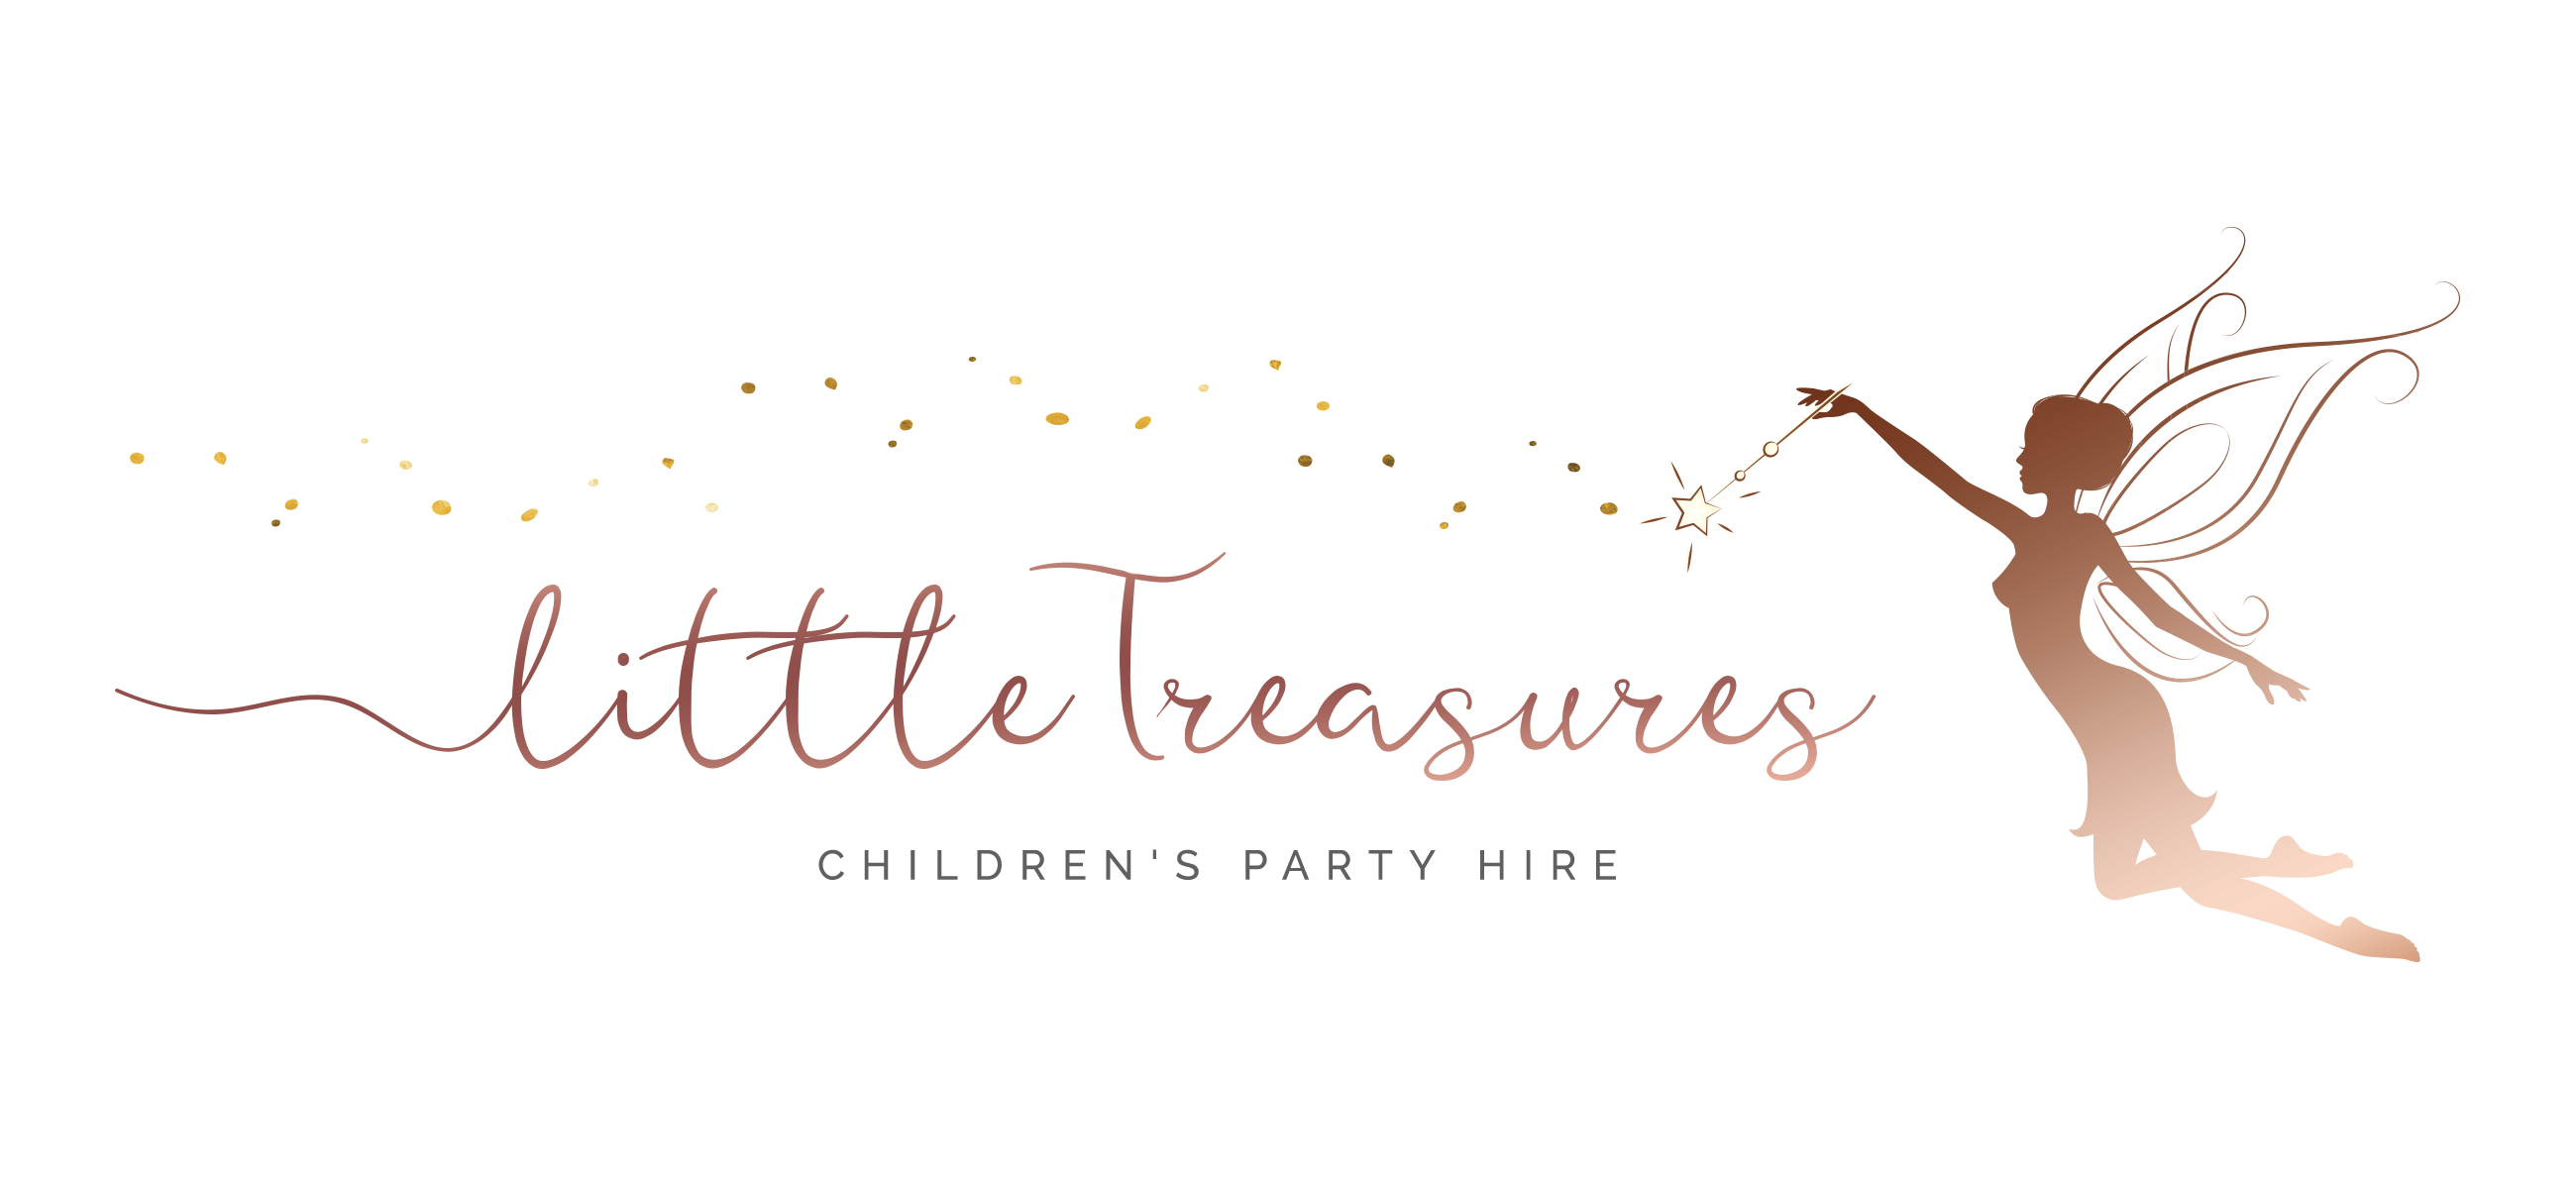 EXHIBITOR: Little Treasures